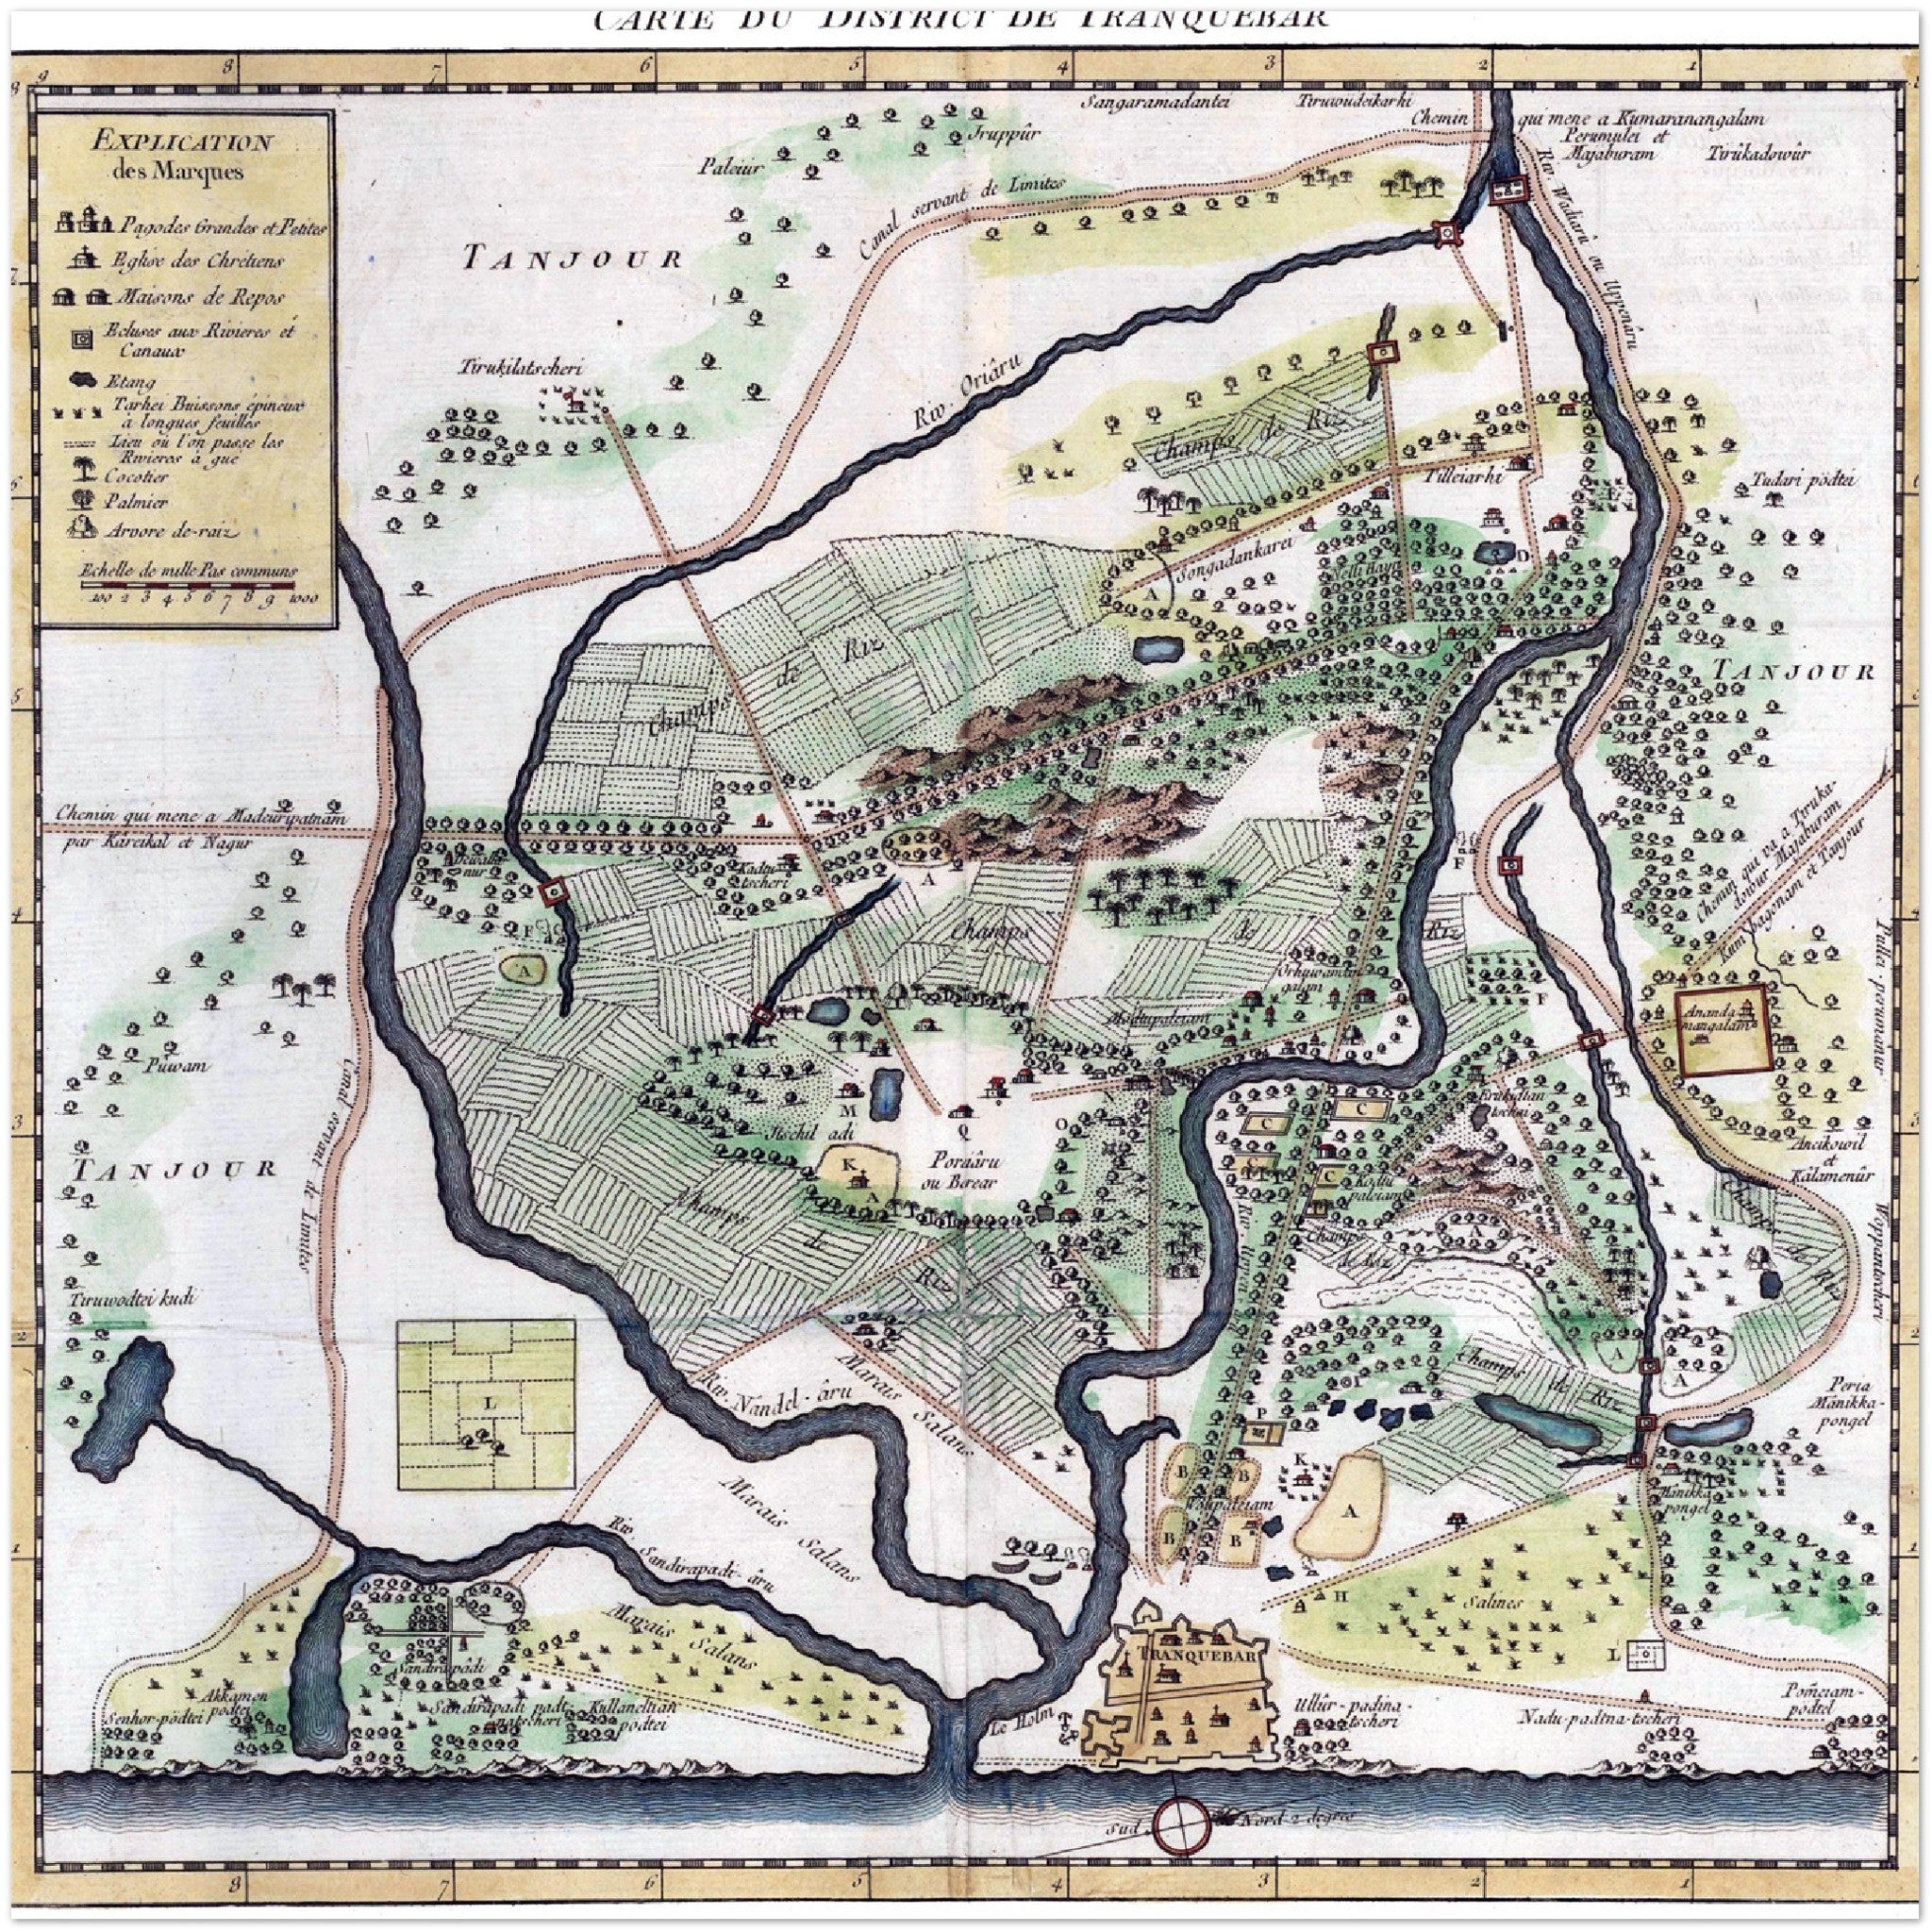 4452408 Tharangambadi, Tamil Nadu, India map by Jacques-Nicolas Bellin c 1755